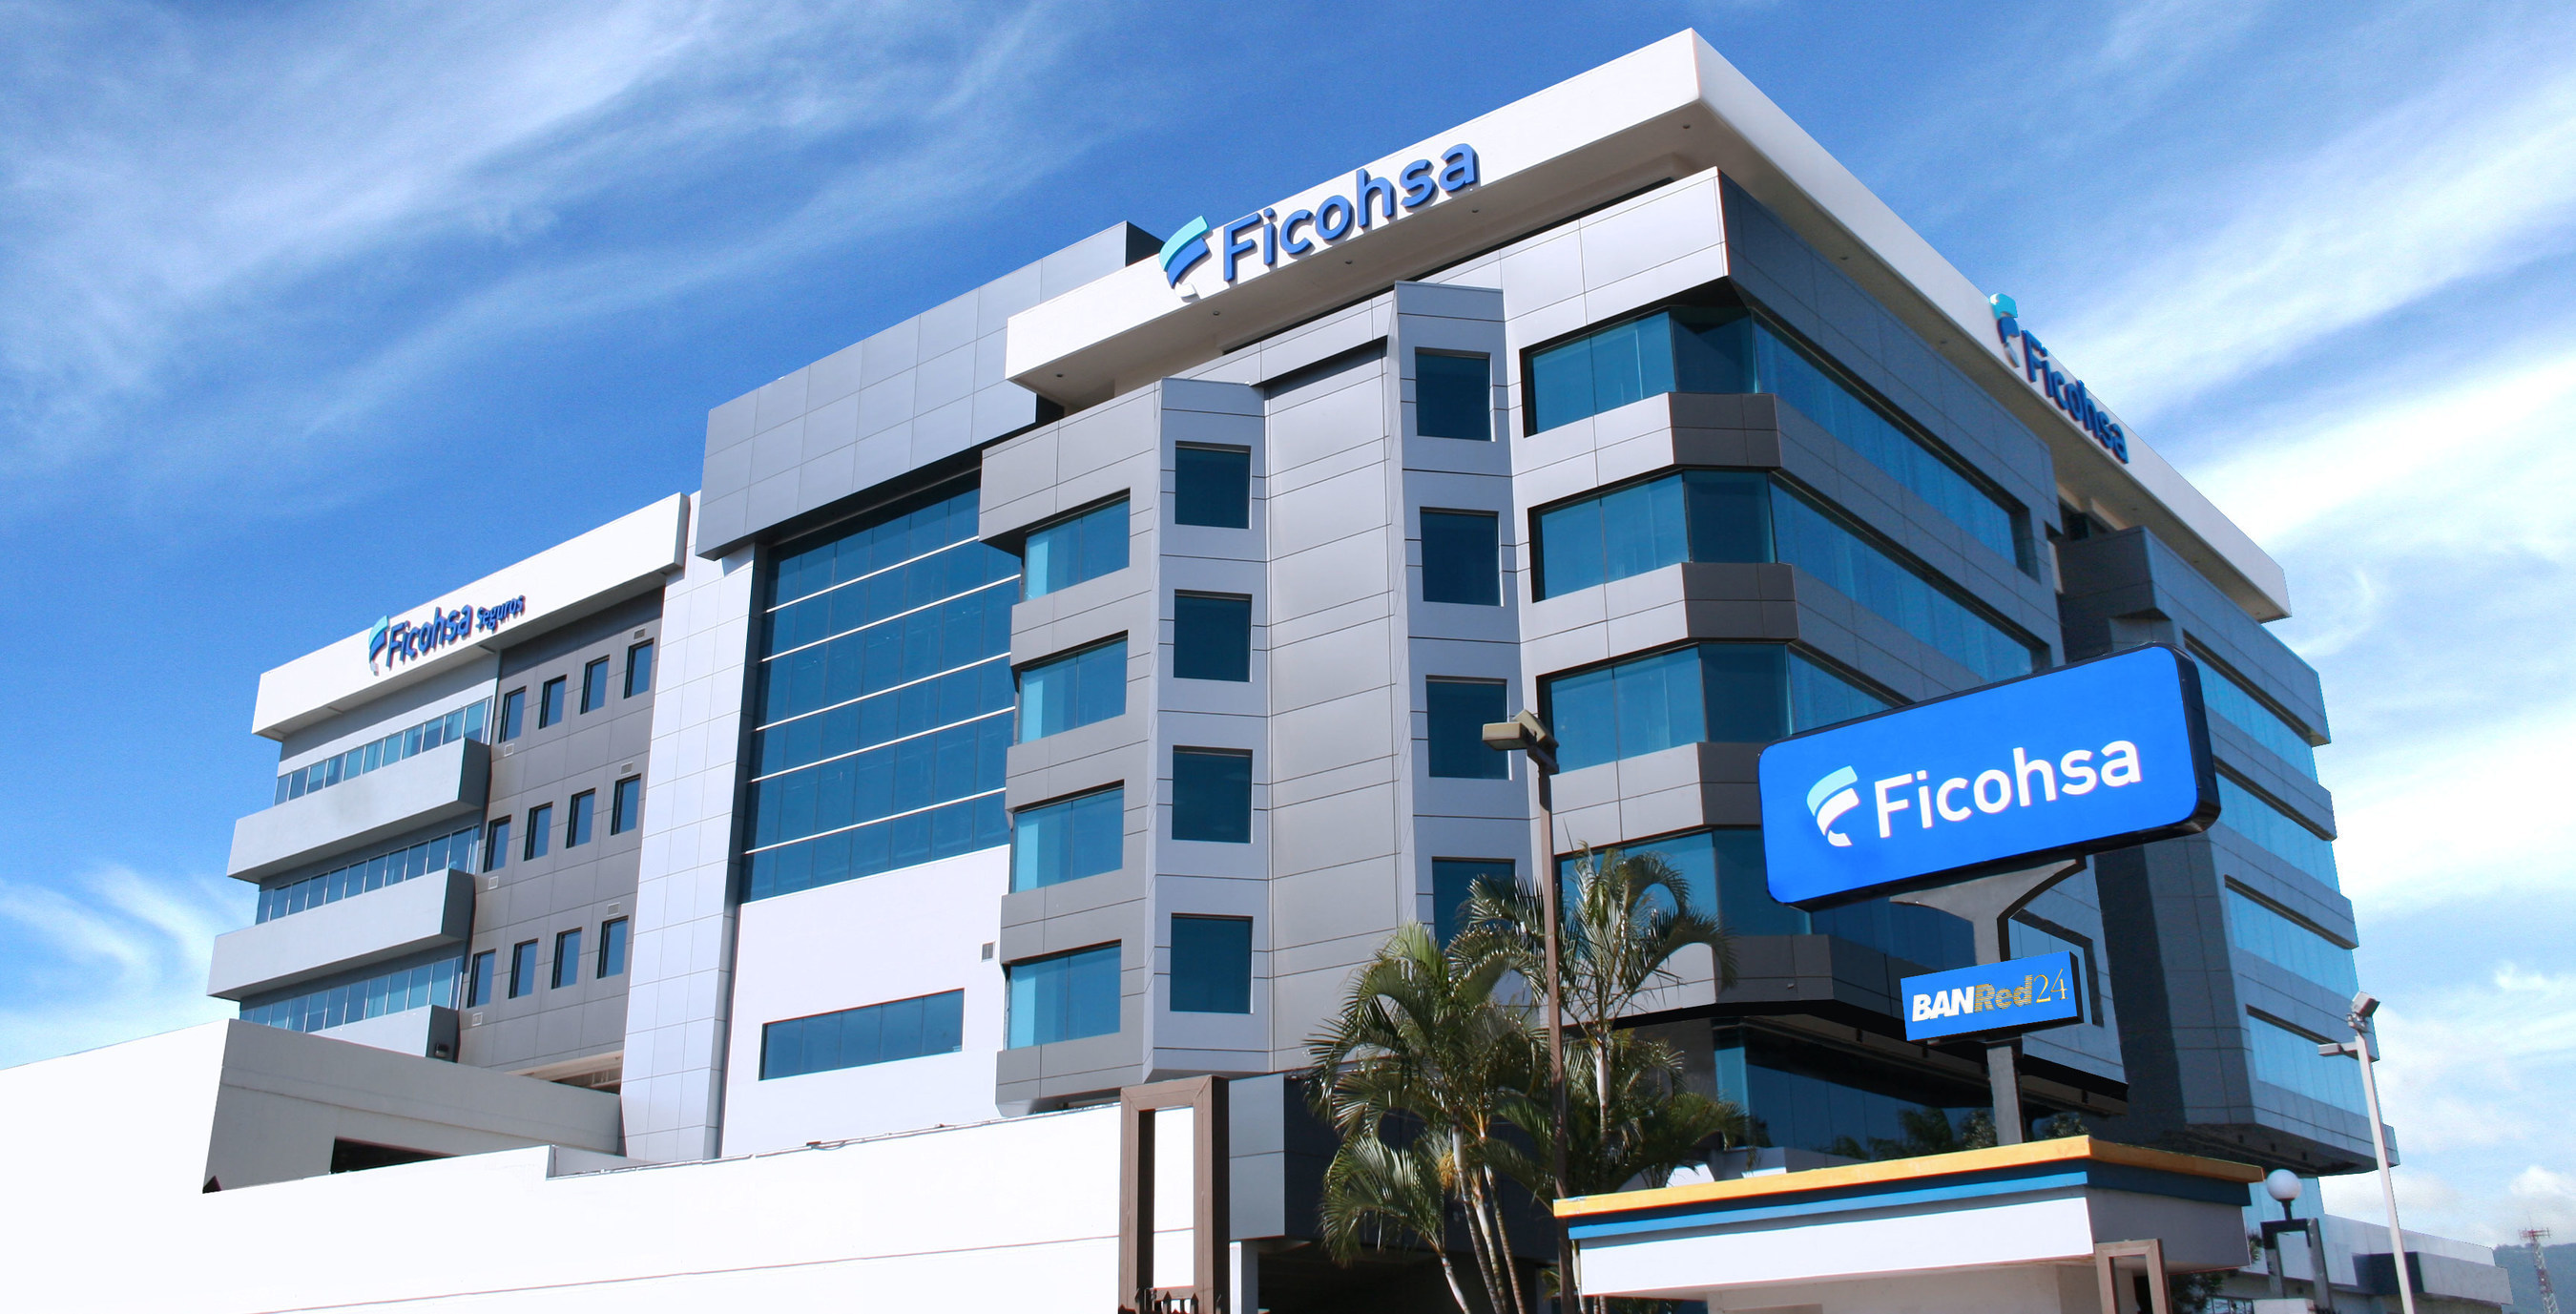 Grupo Financiero Ficohsa headquarters.